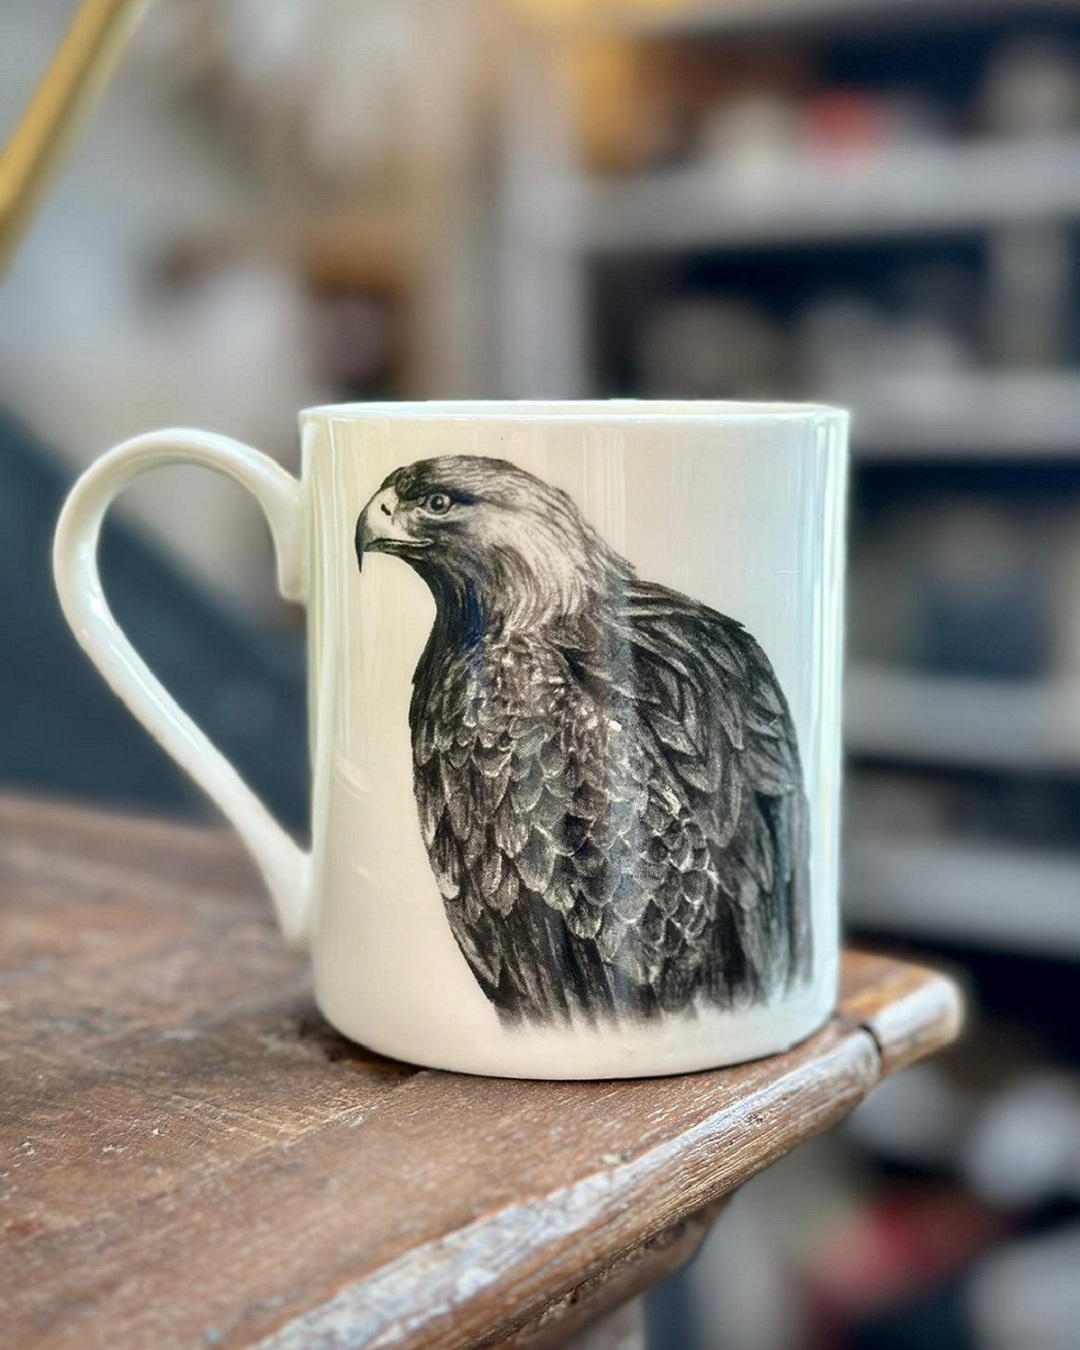 Mug with eagle on it